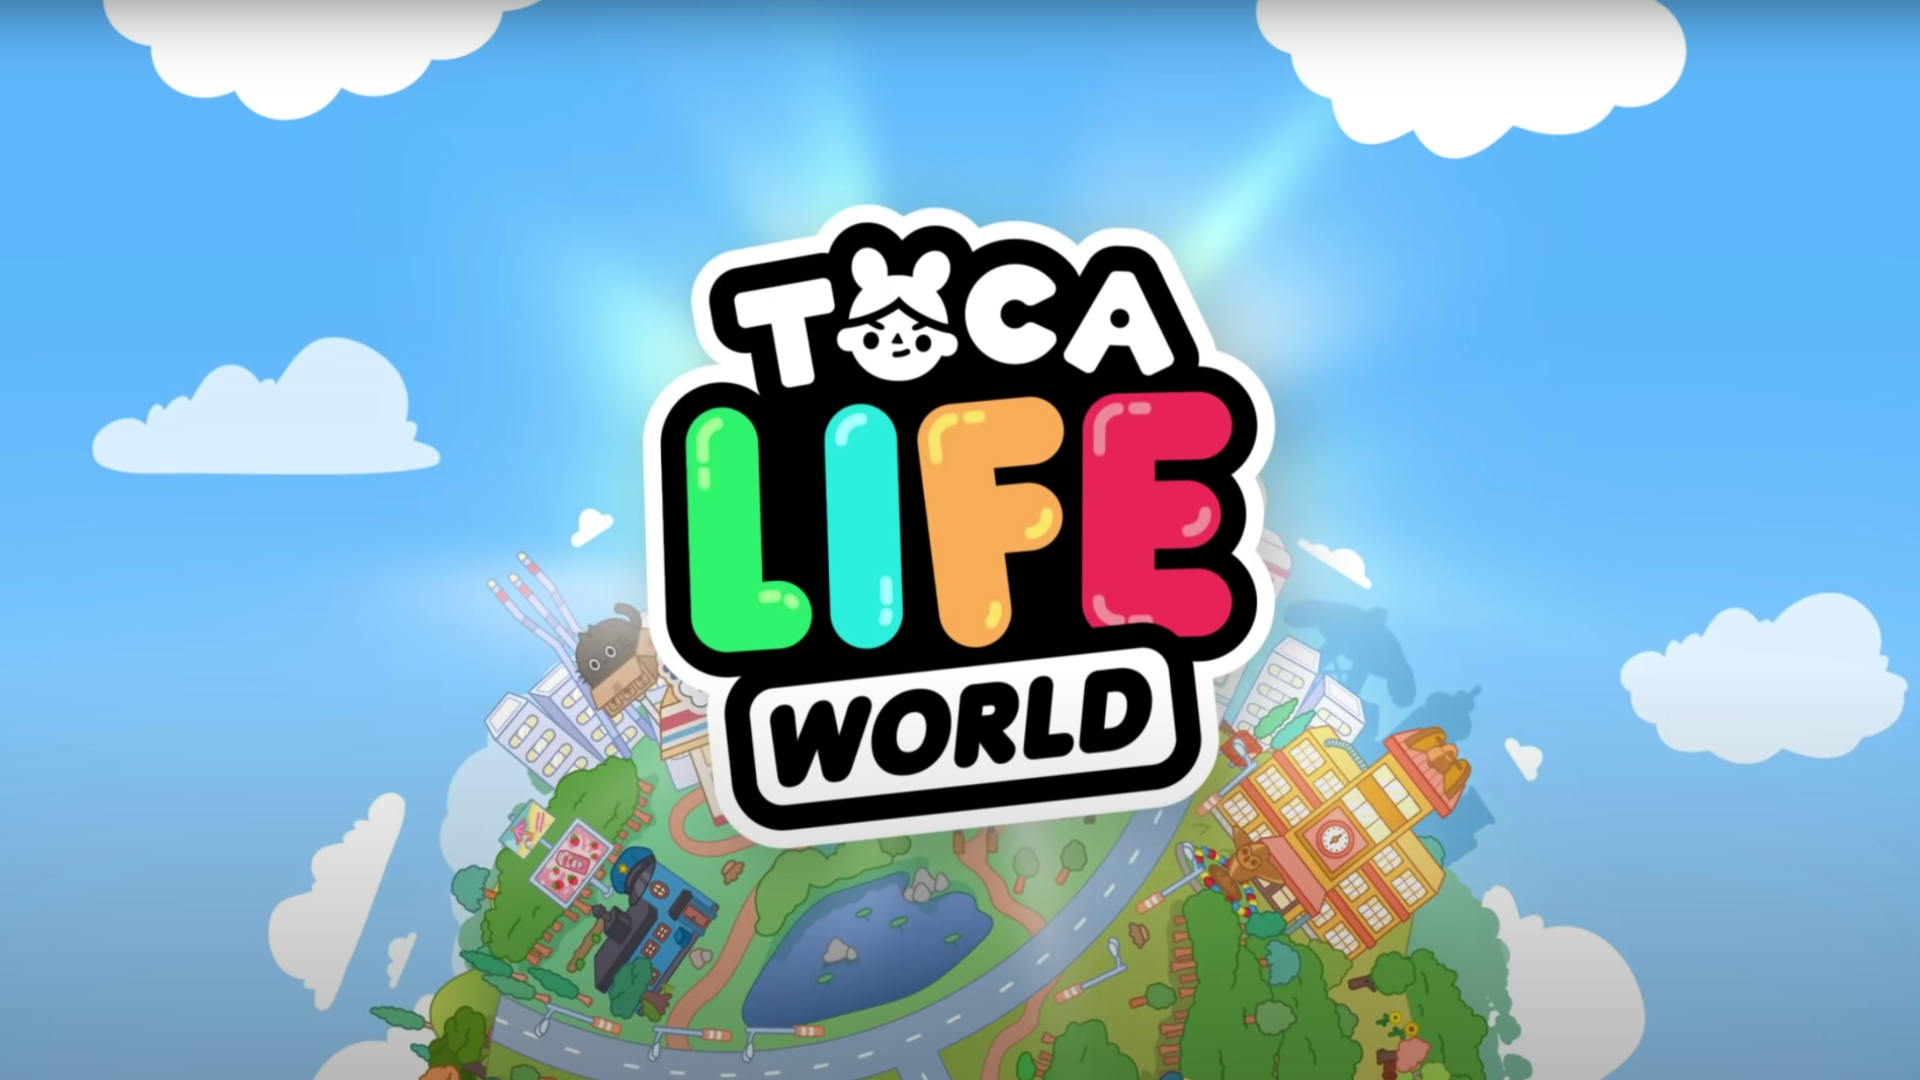 Educational games - The Toca Life World logo against a blue sky